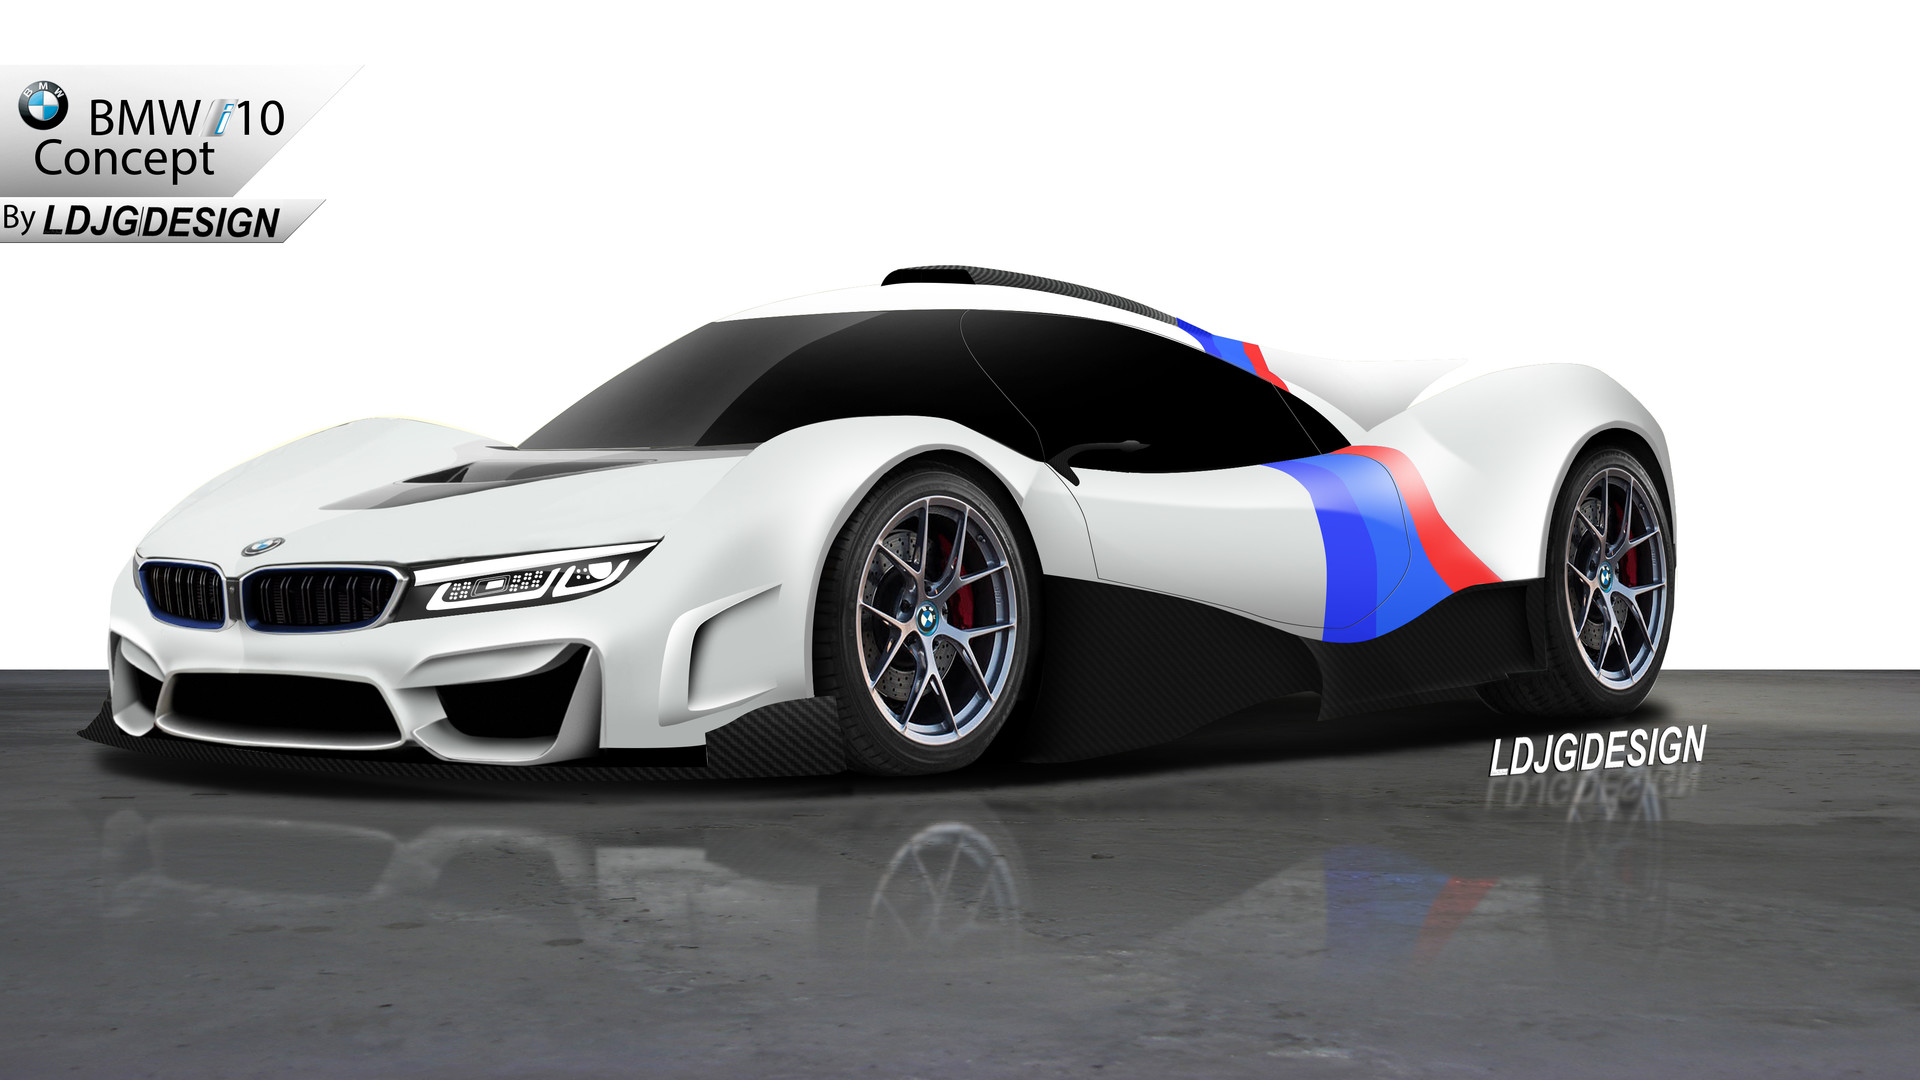 Lewis De Jongh - BMW i10 (might change the name) Concept